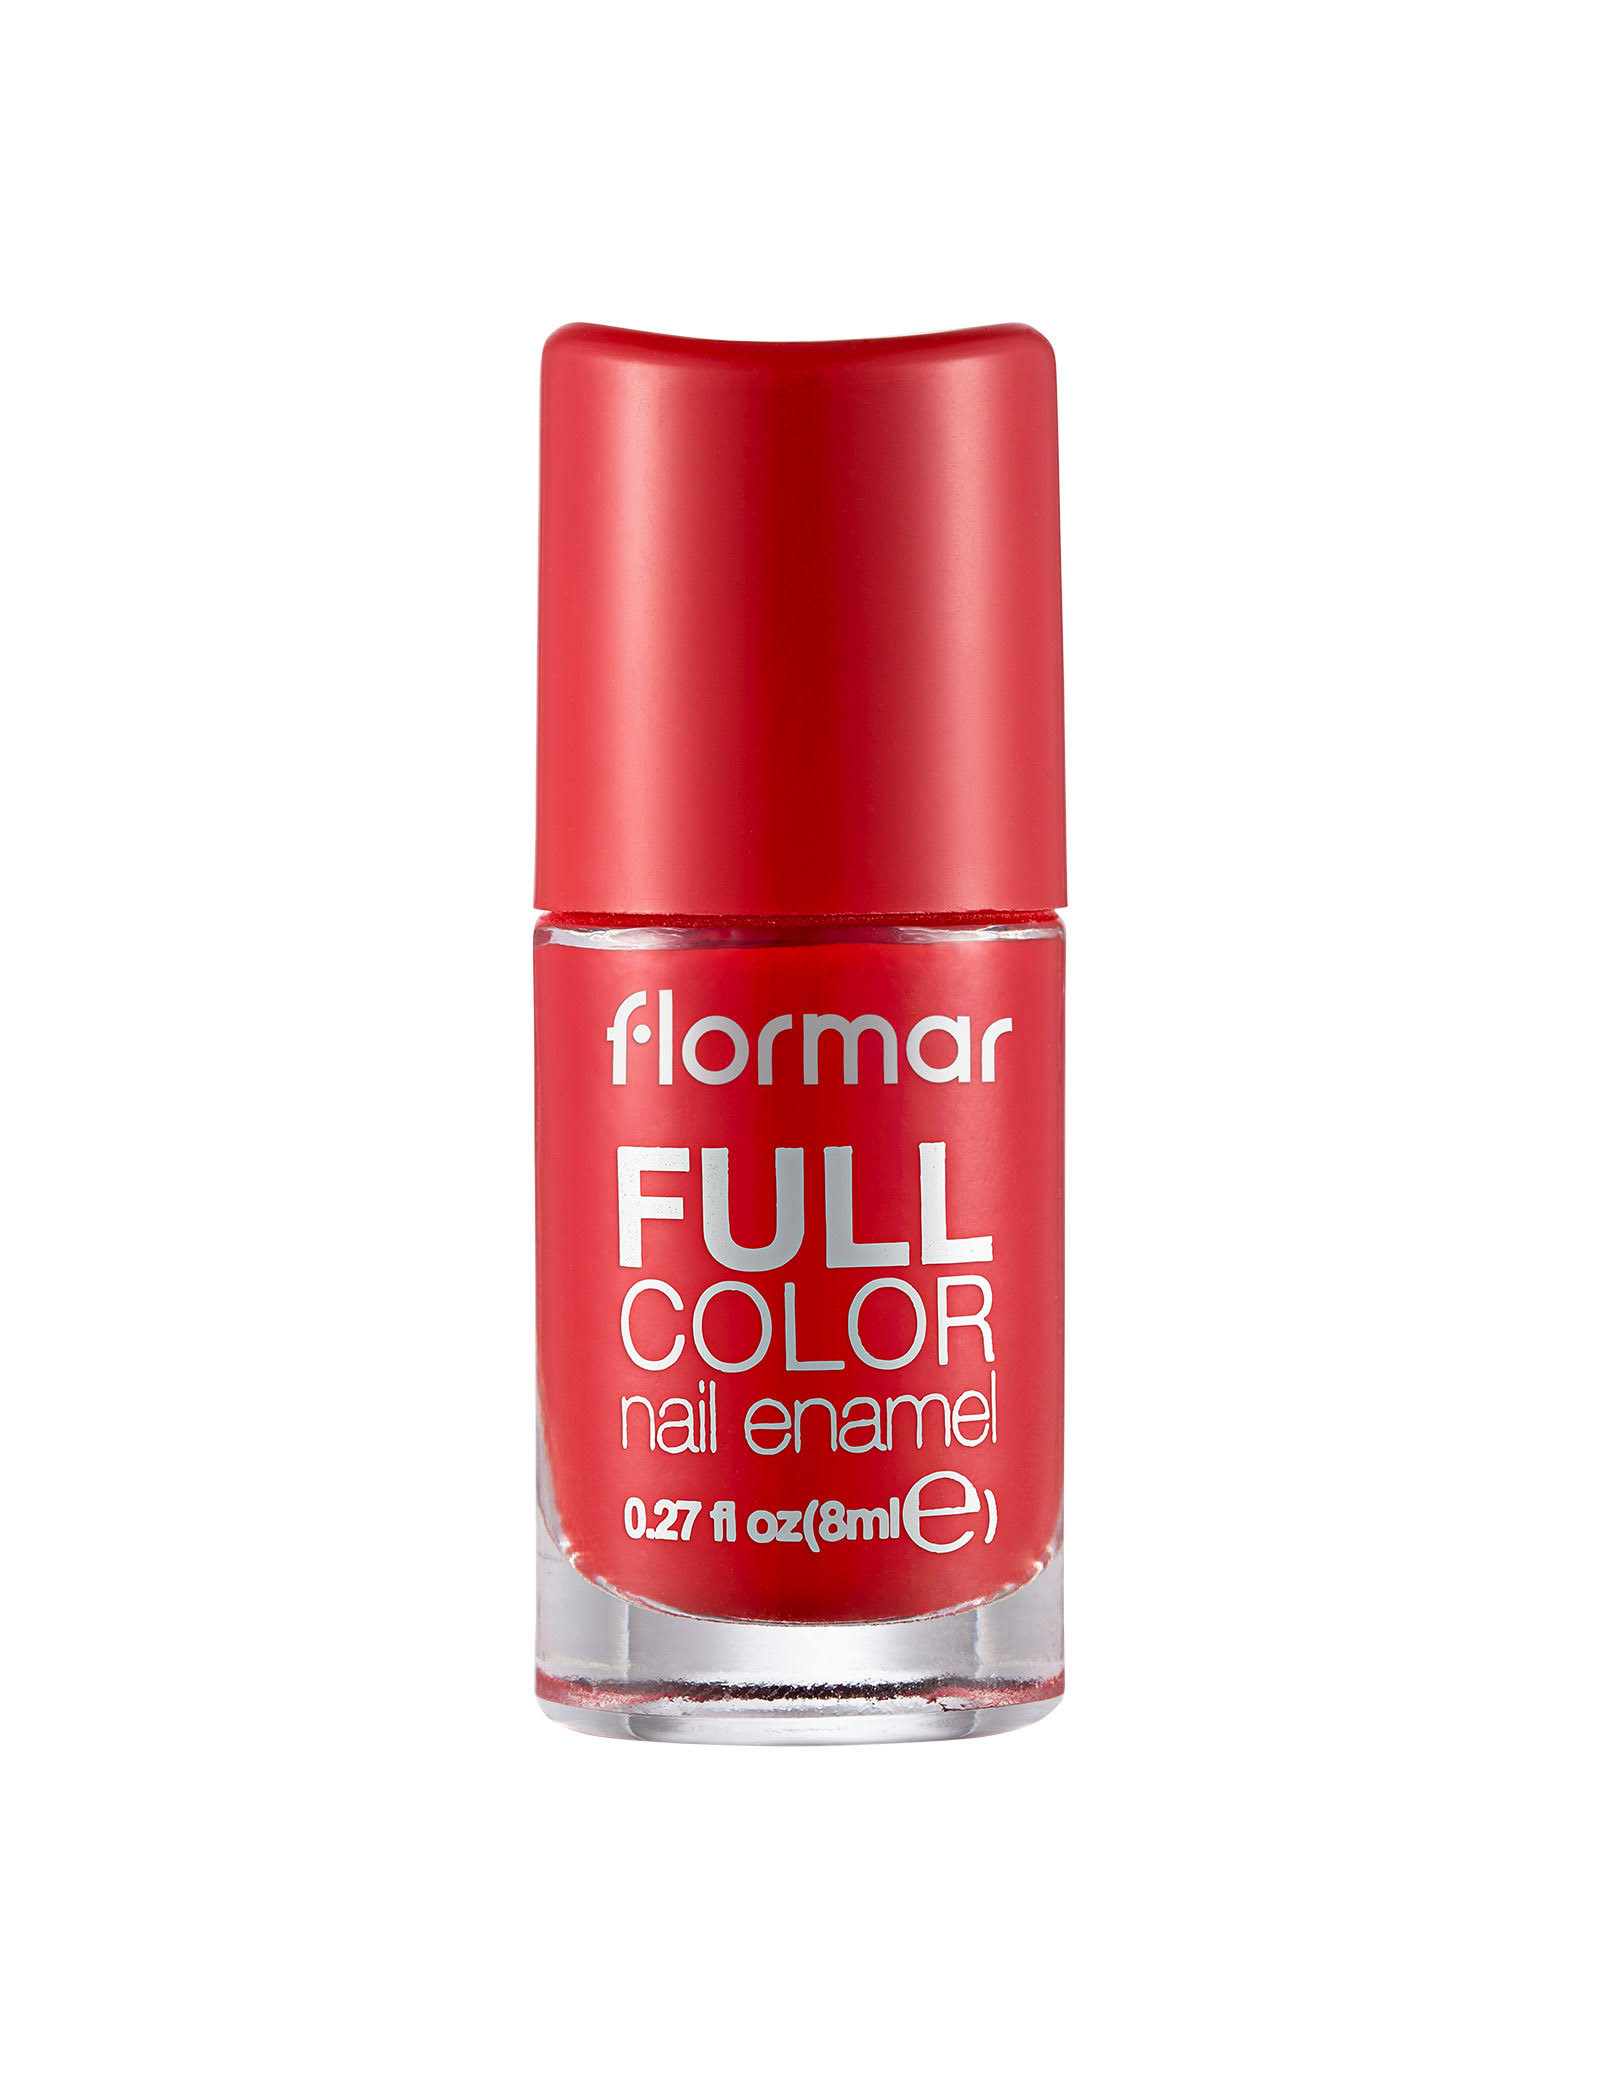 Flormar Full Color Nail Enamel - Fc08 Optimistic Red, 8ml